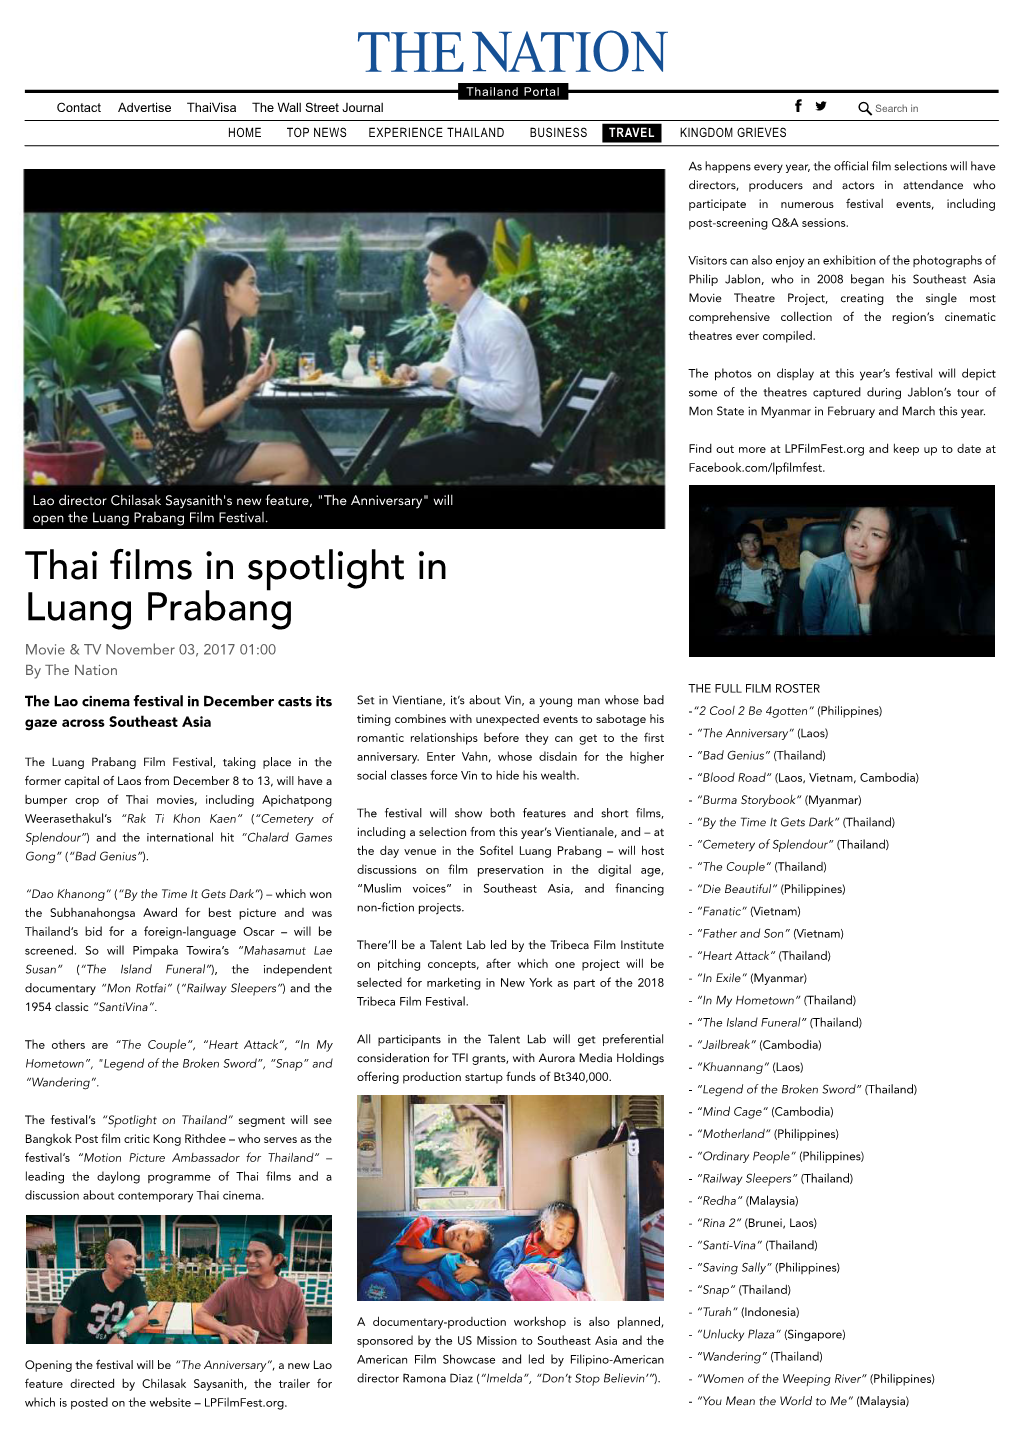 Thai Films in Spotlight in Luang Prabang